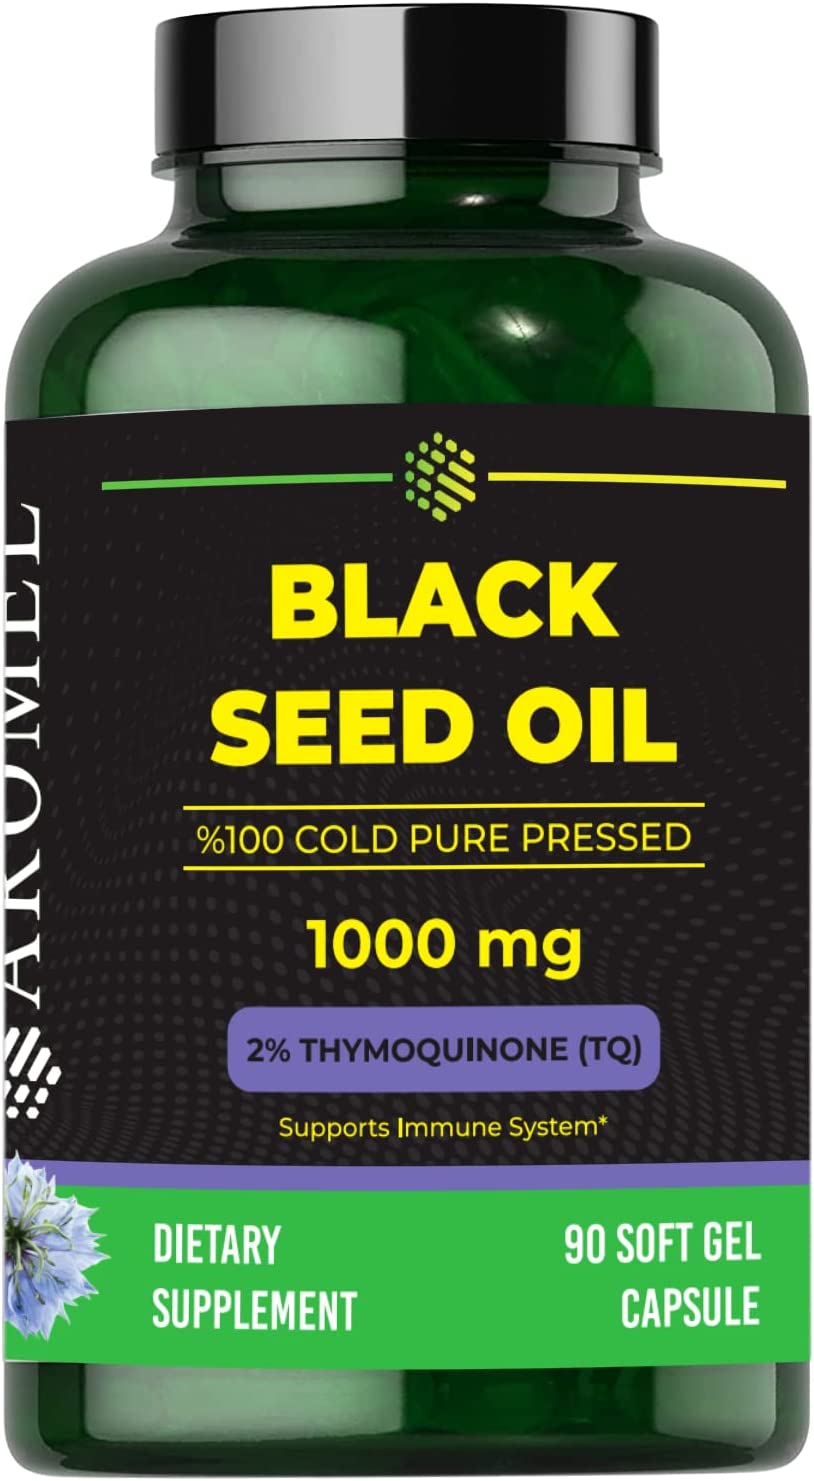 Black Seed Oil Capsules, 90 Days Supply, 2% Thymoquinone, Non-GMO, Gluten Free